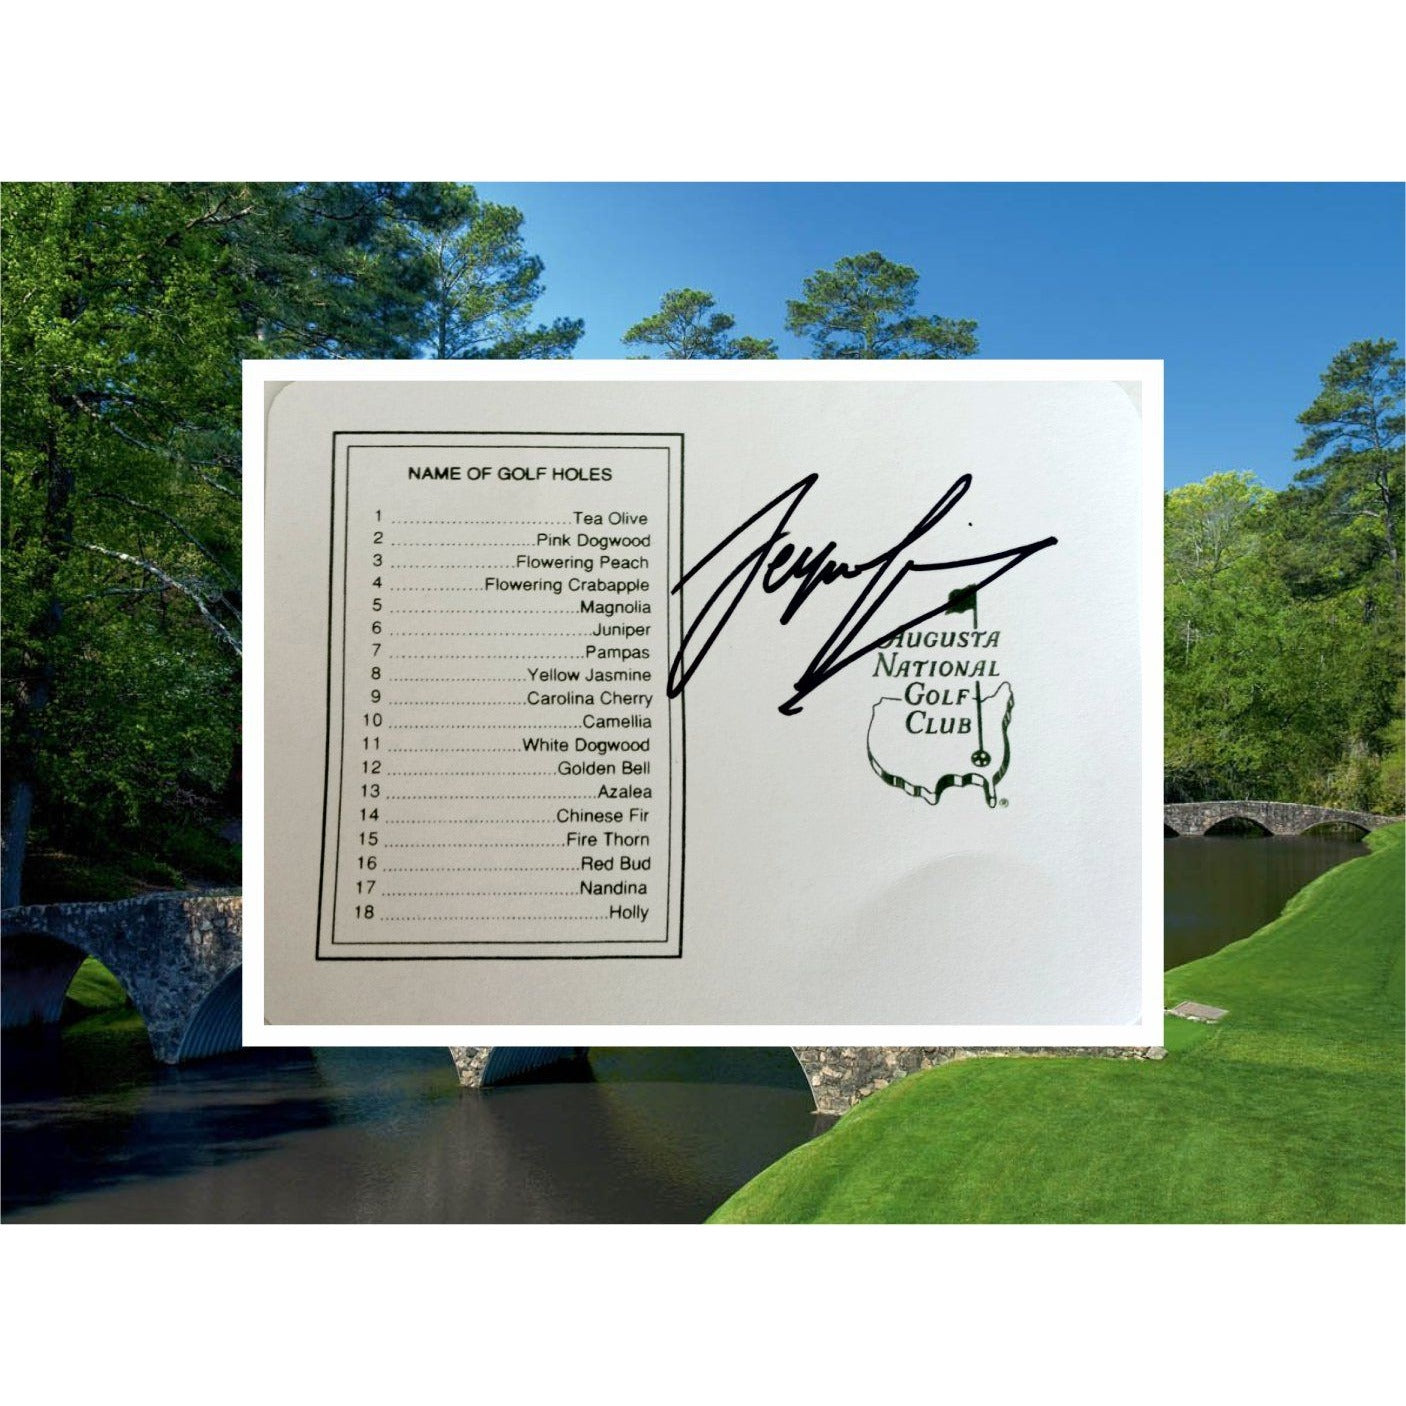 Sergio Garcia Masters scorecard signed with proof